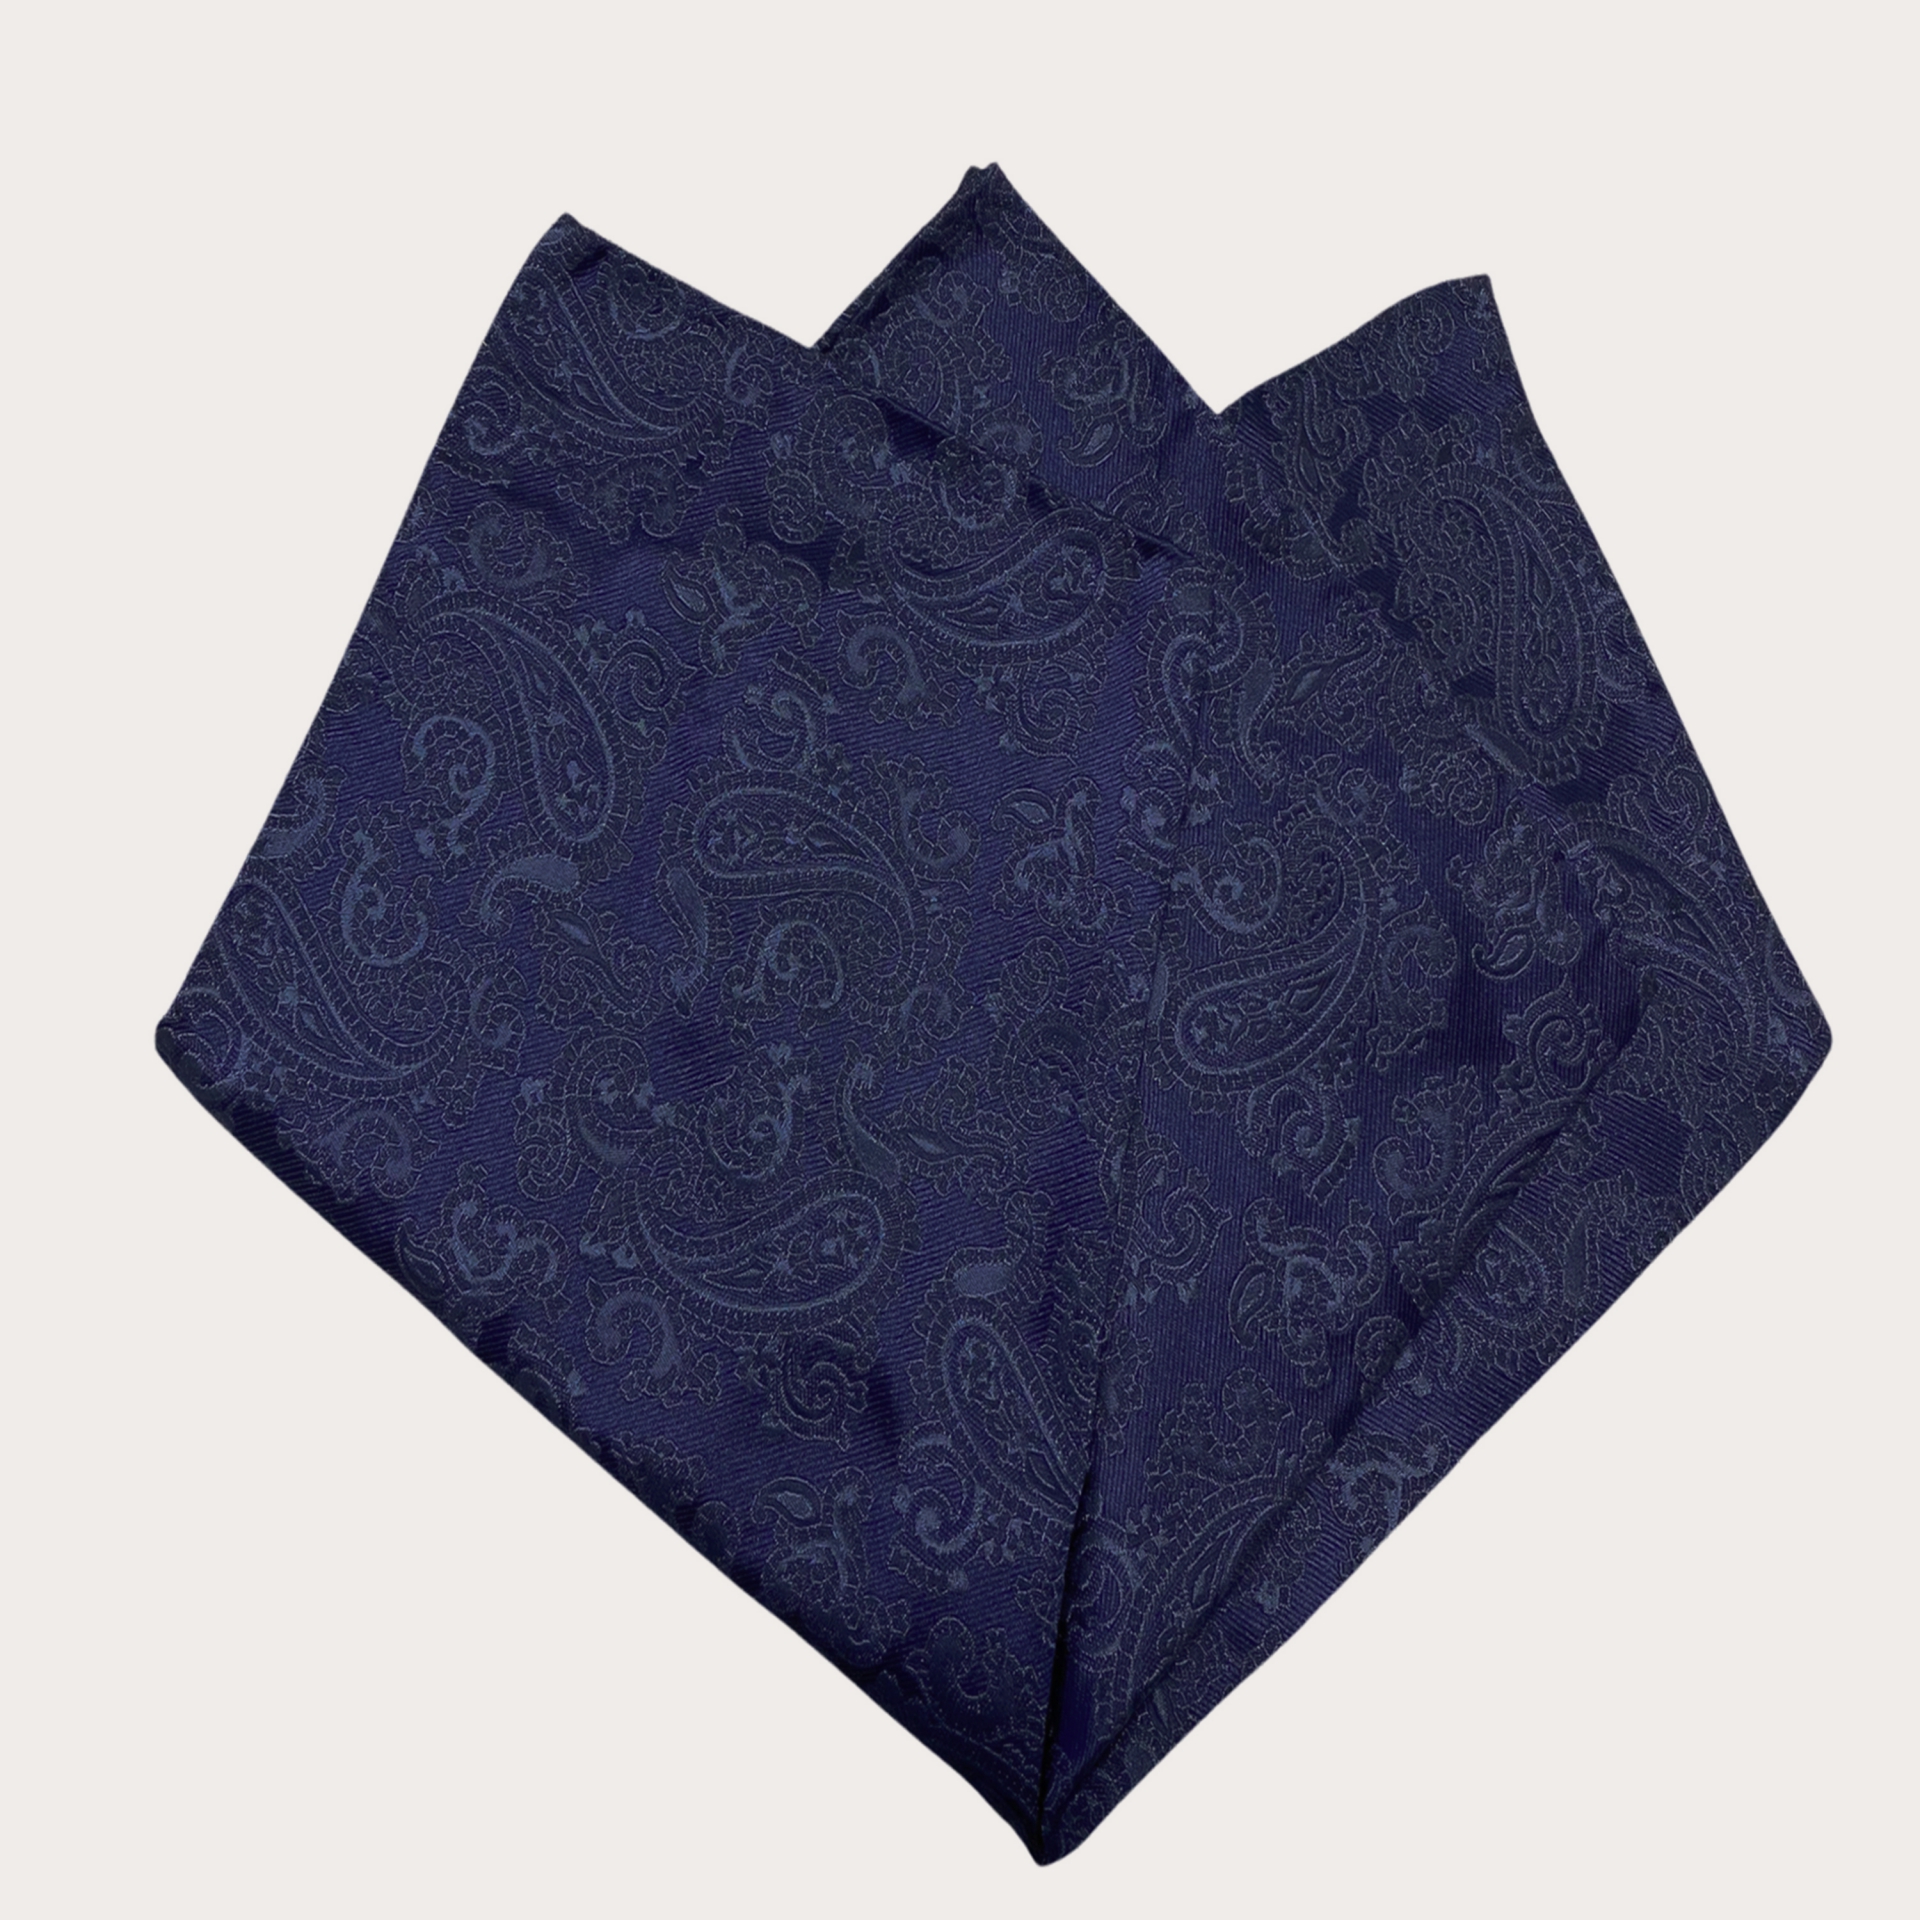 BRUCLE Jacquard silk pocket square, navy blue paisley pattern